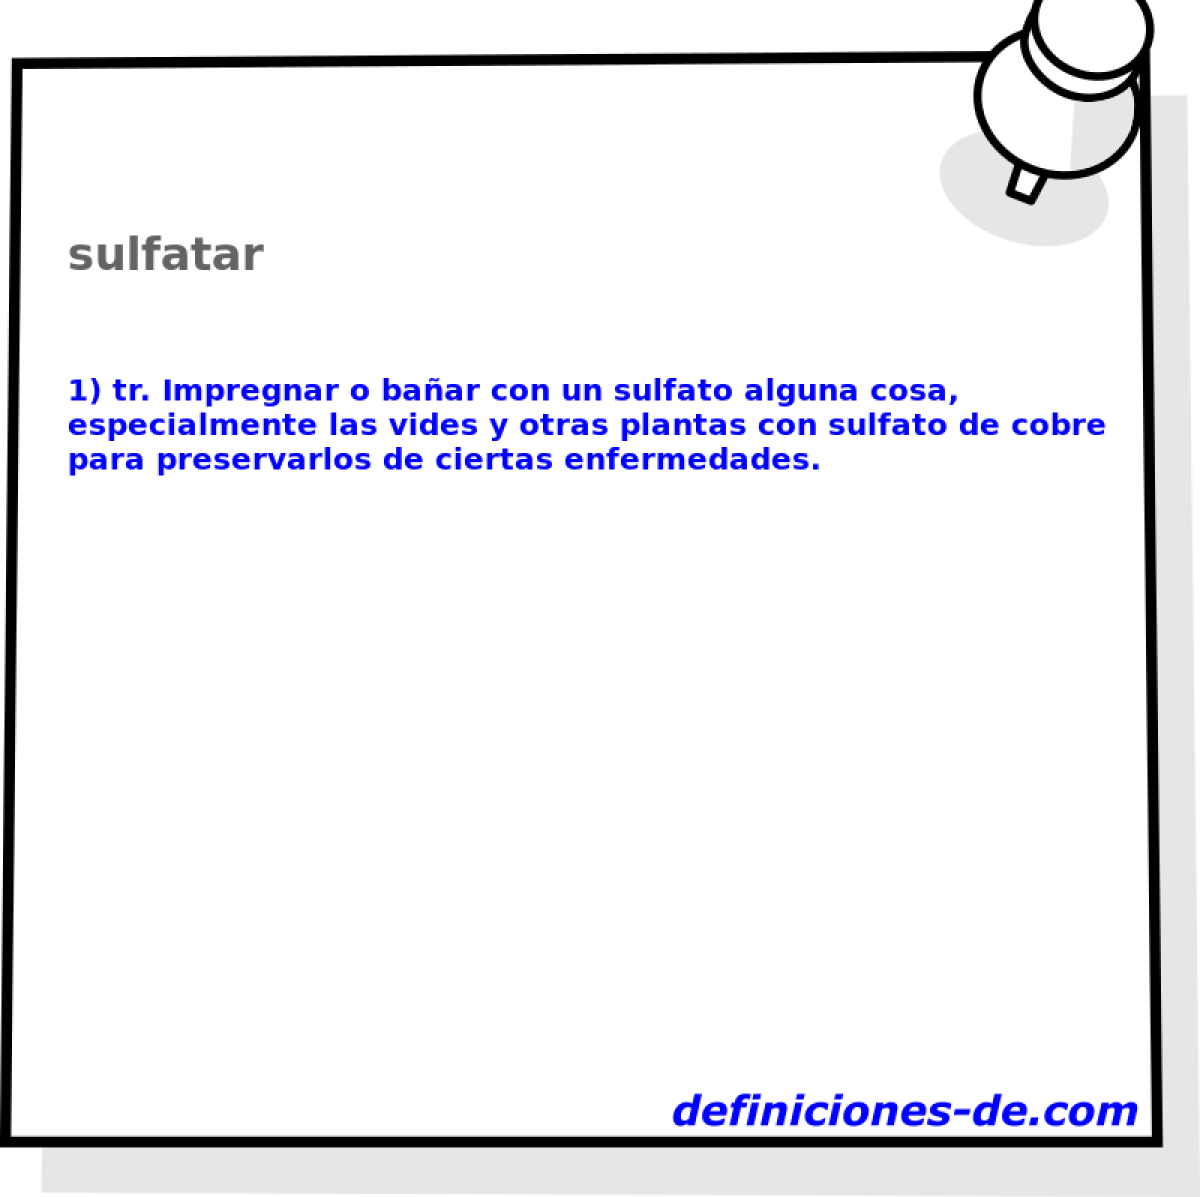 sulfatar 